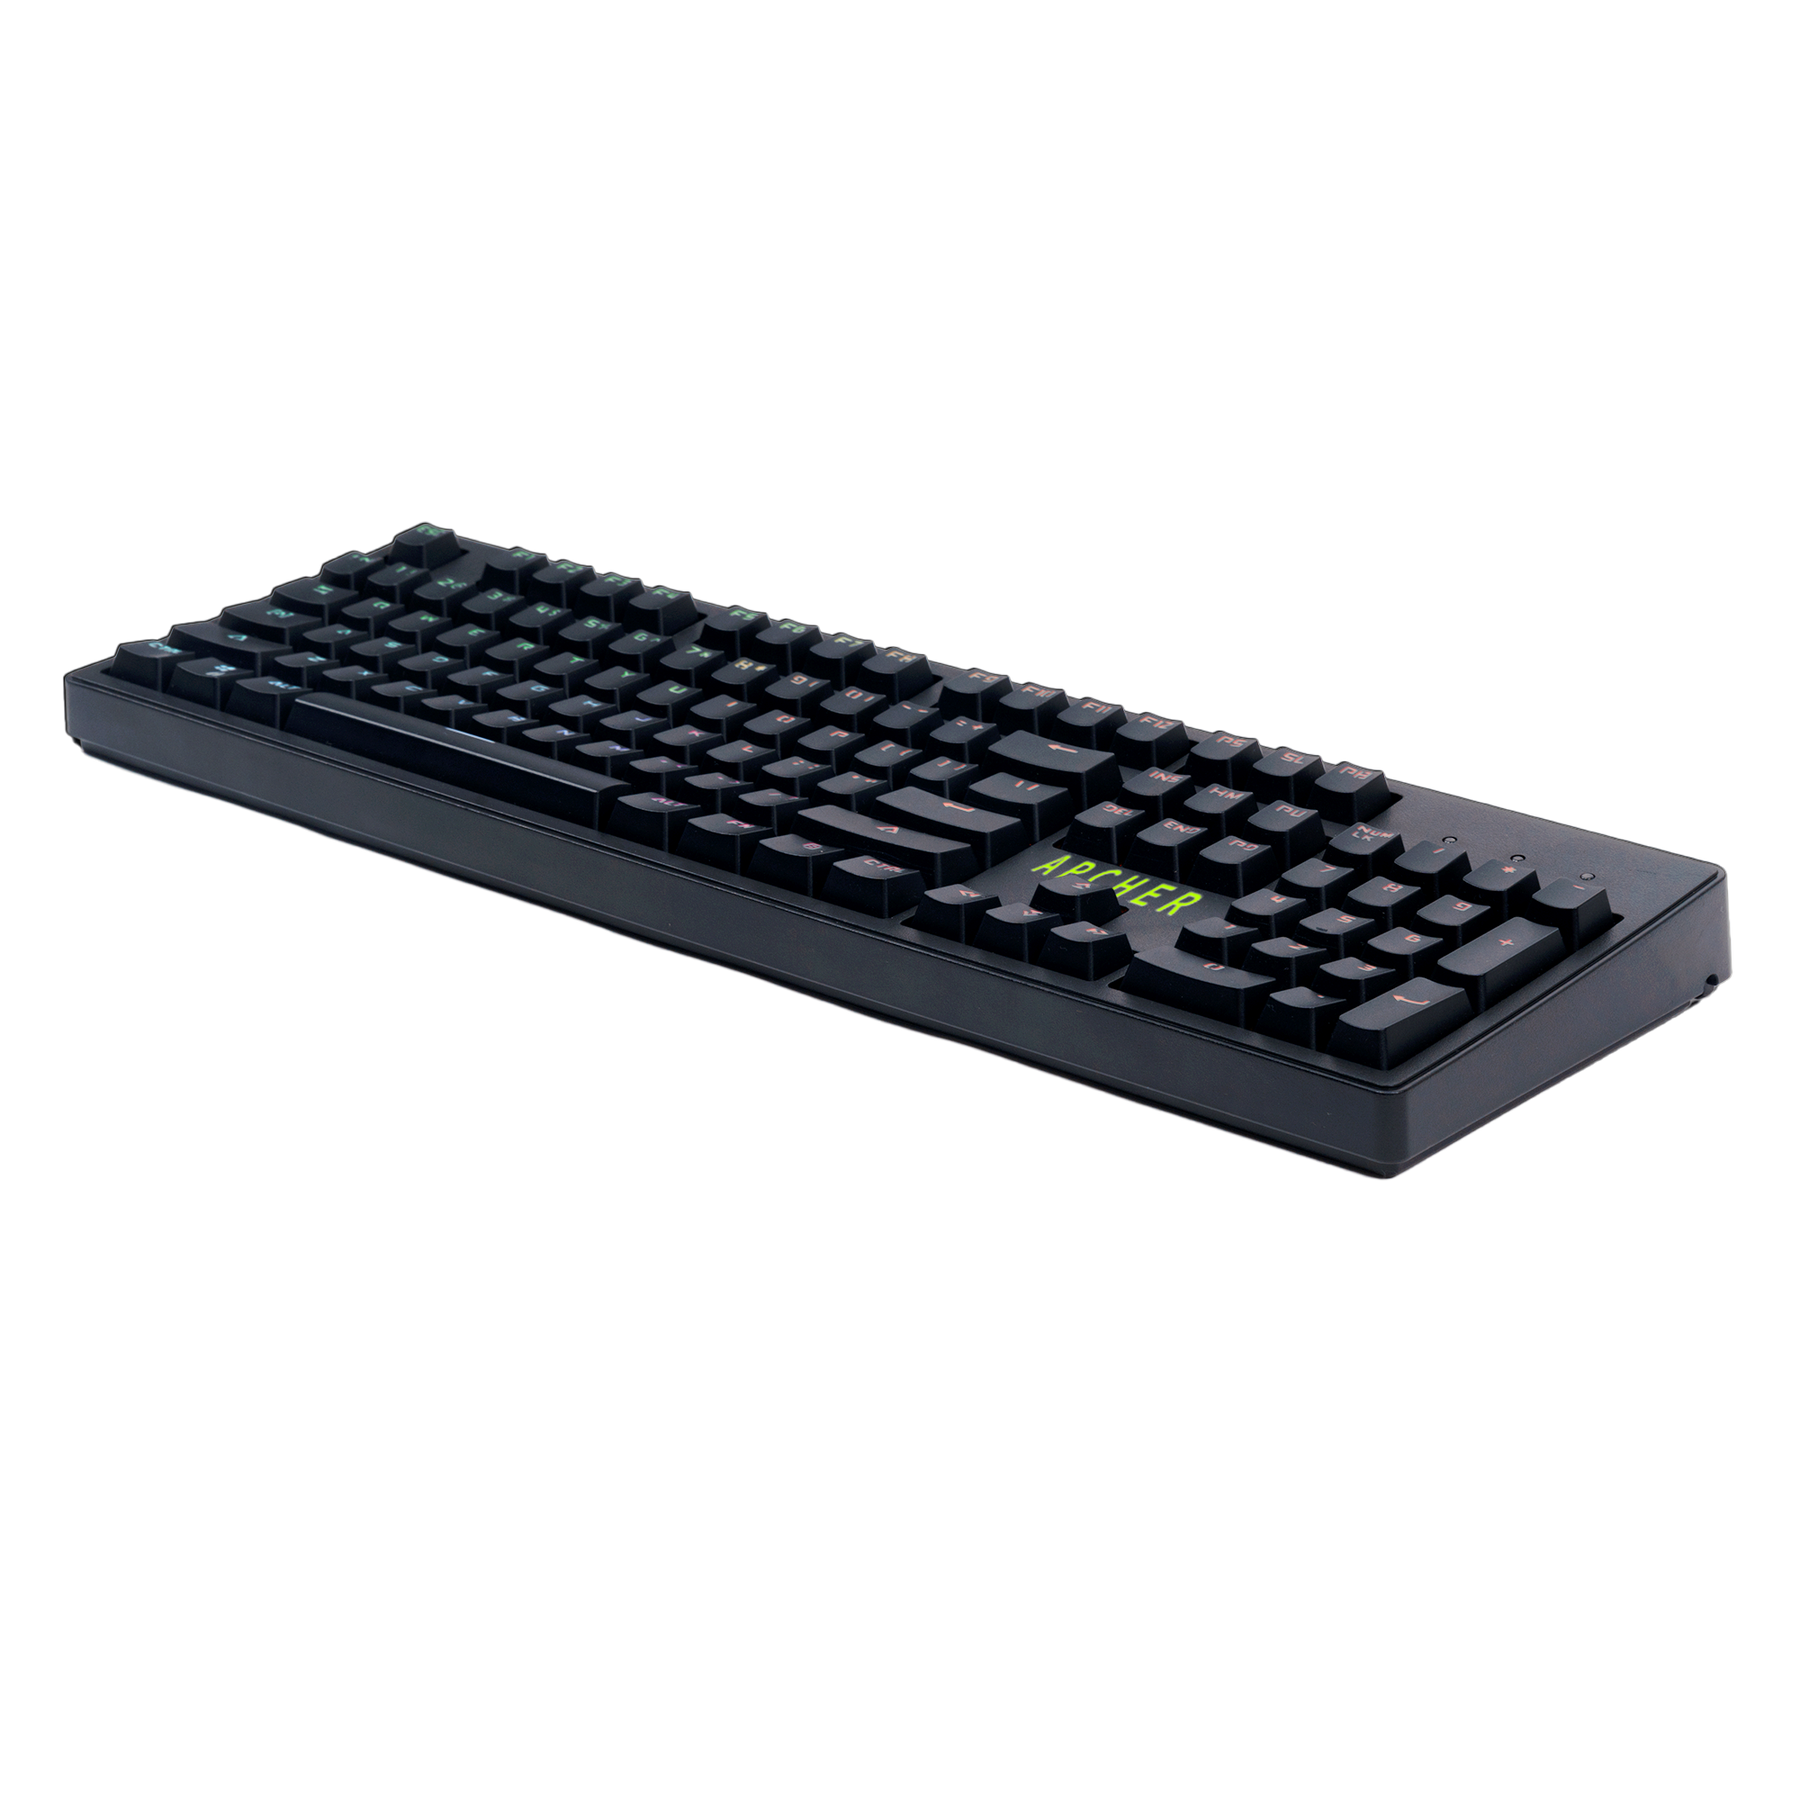 Astra M200 Mechanical Keyboard with Blue Keys